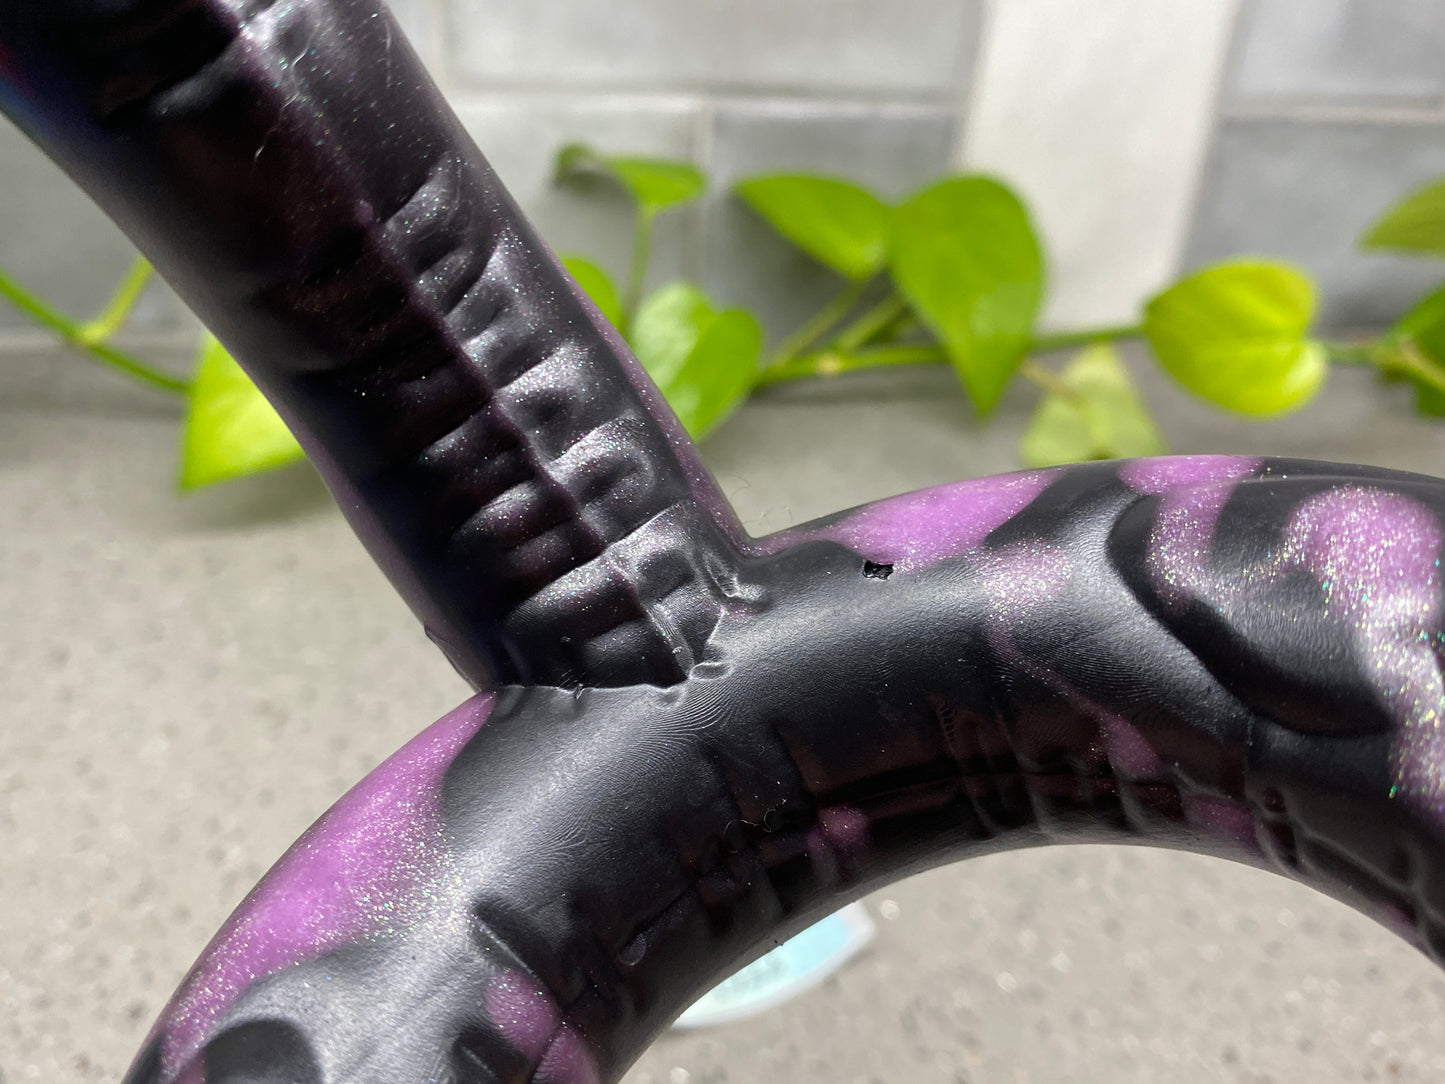 a close up of a purple and black bike handle